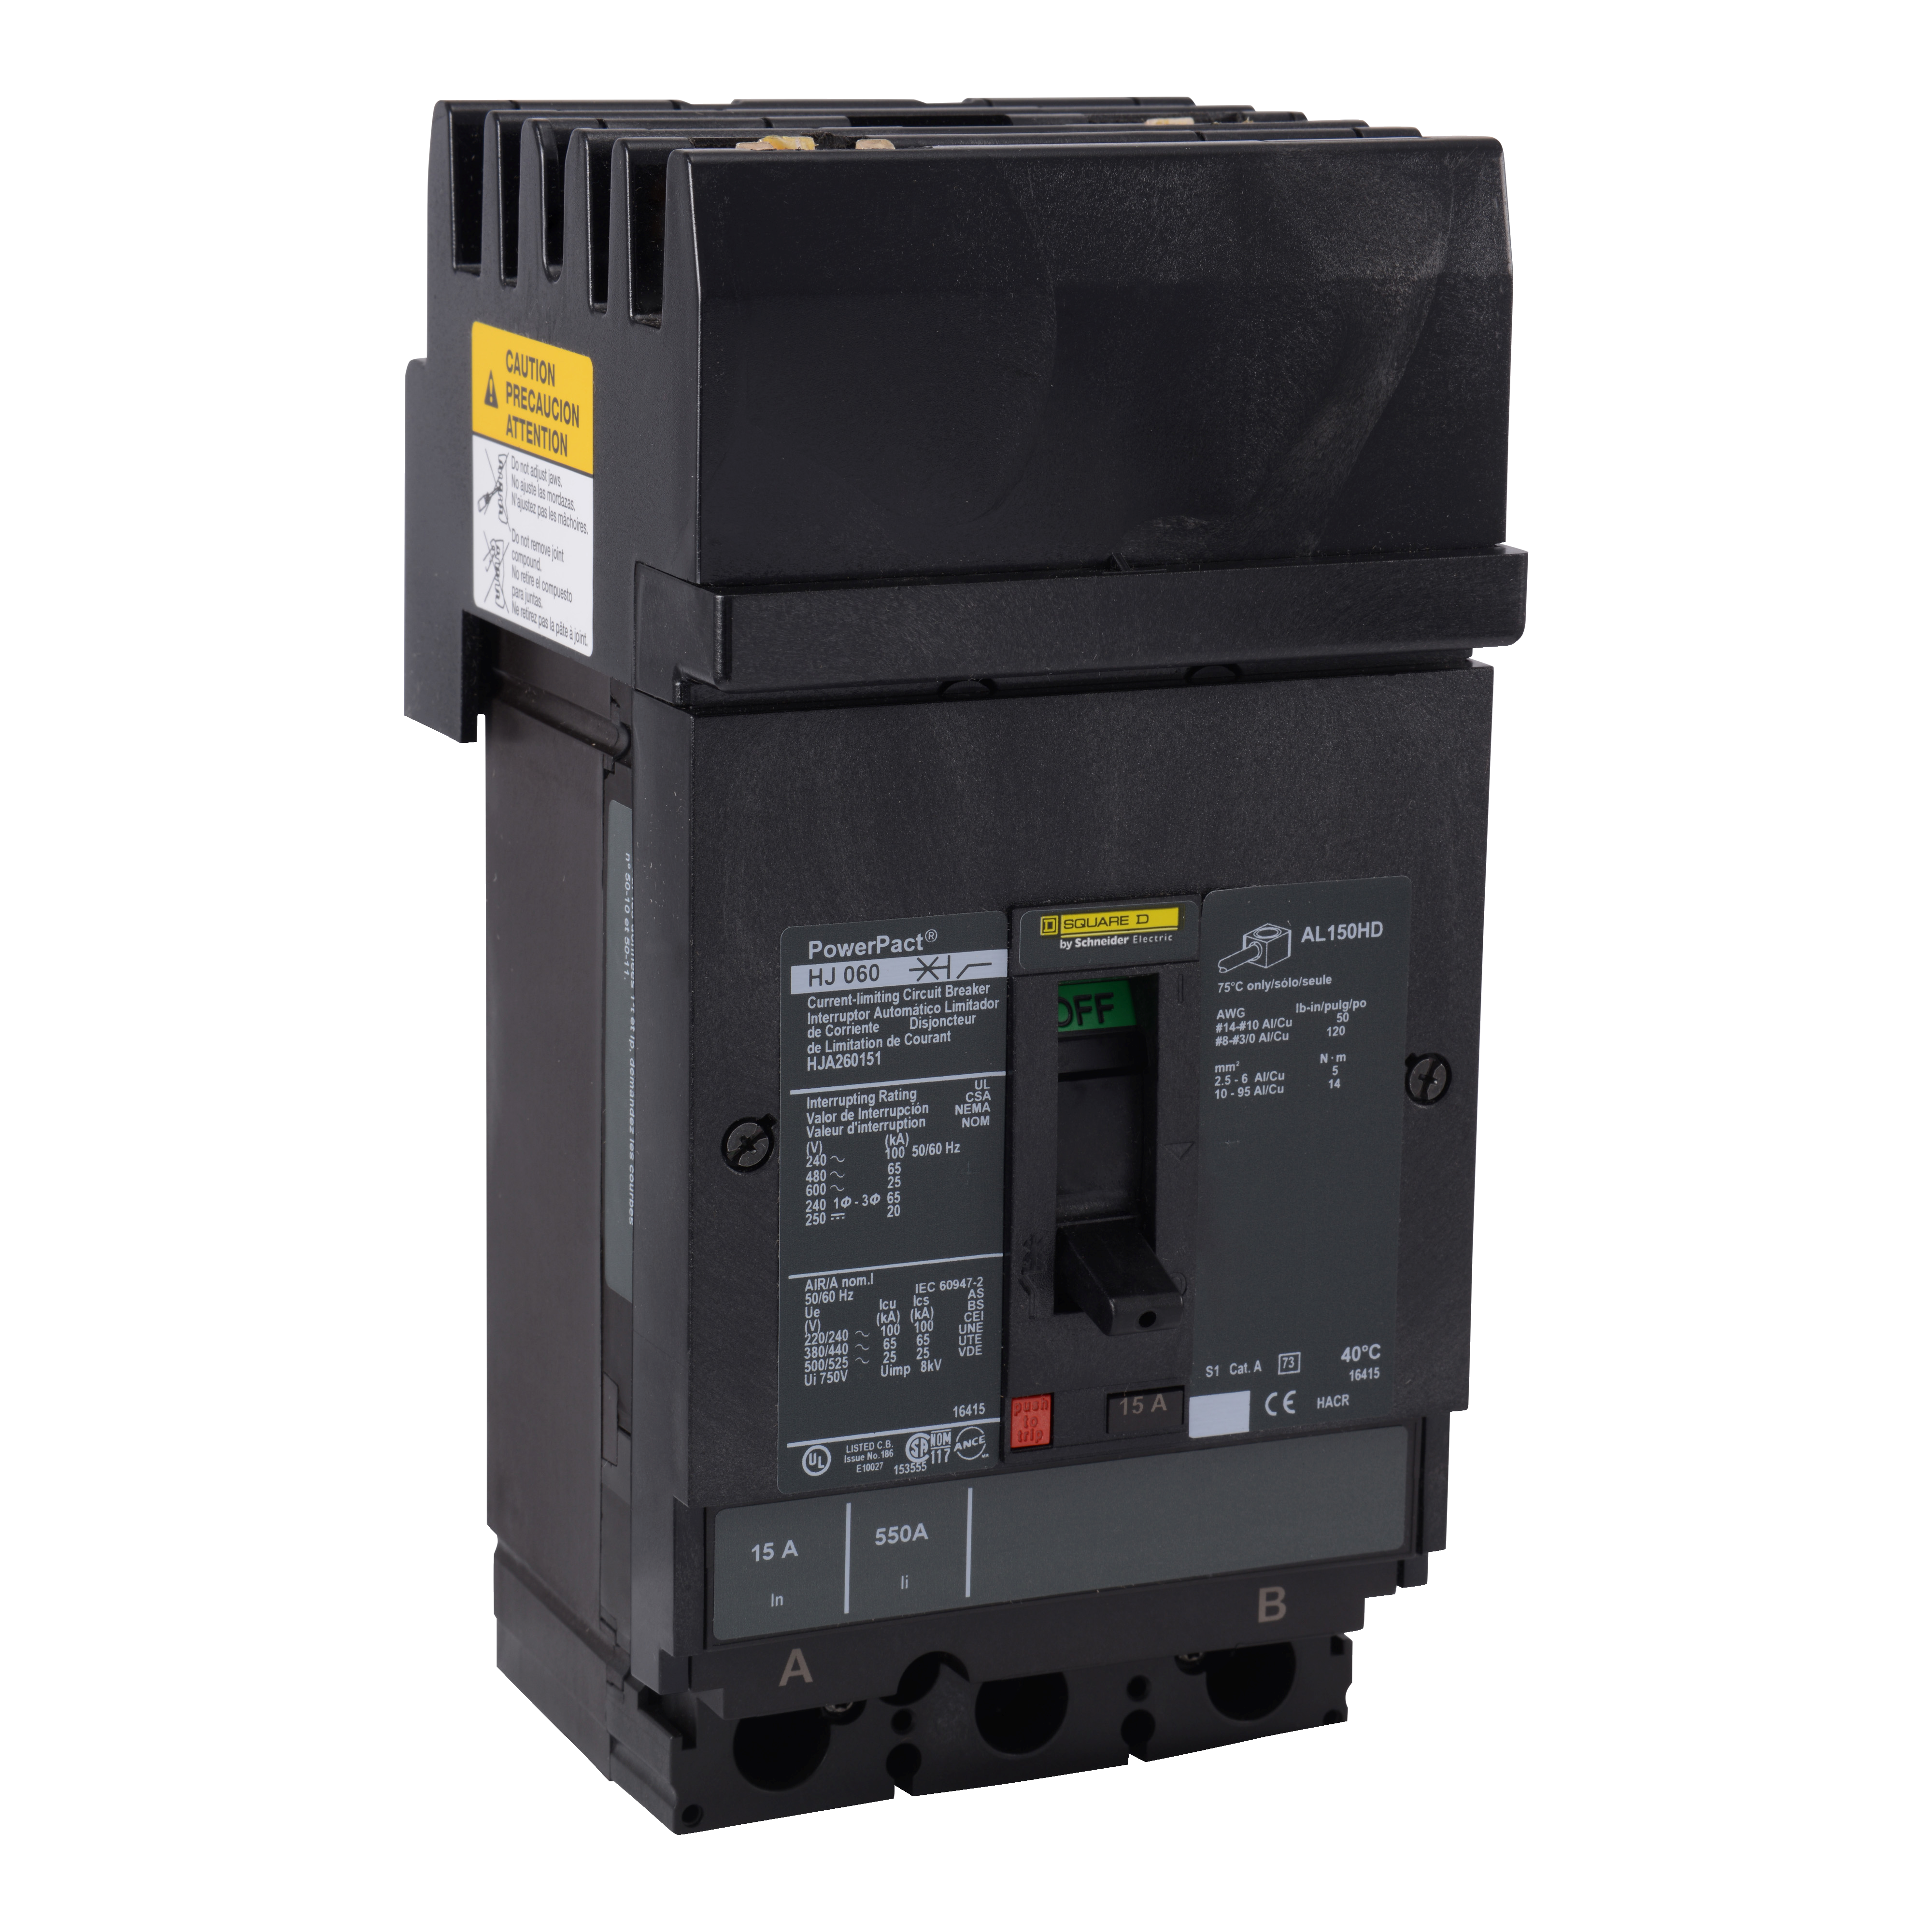 Circuit breaker, PowerPacT H, 30A, 2 pole, 600VAC, 25kA, I-Line, thermal magnetic, 80%, CA